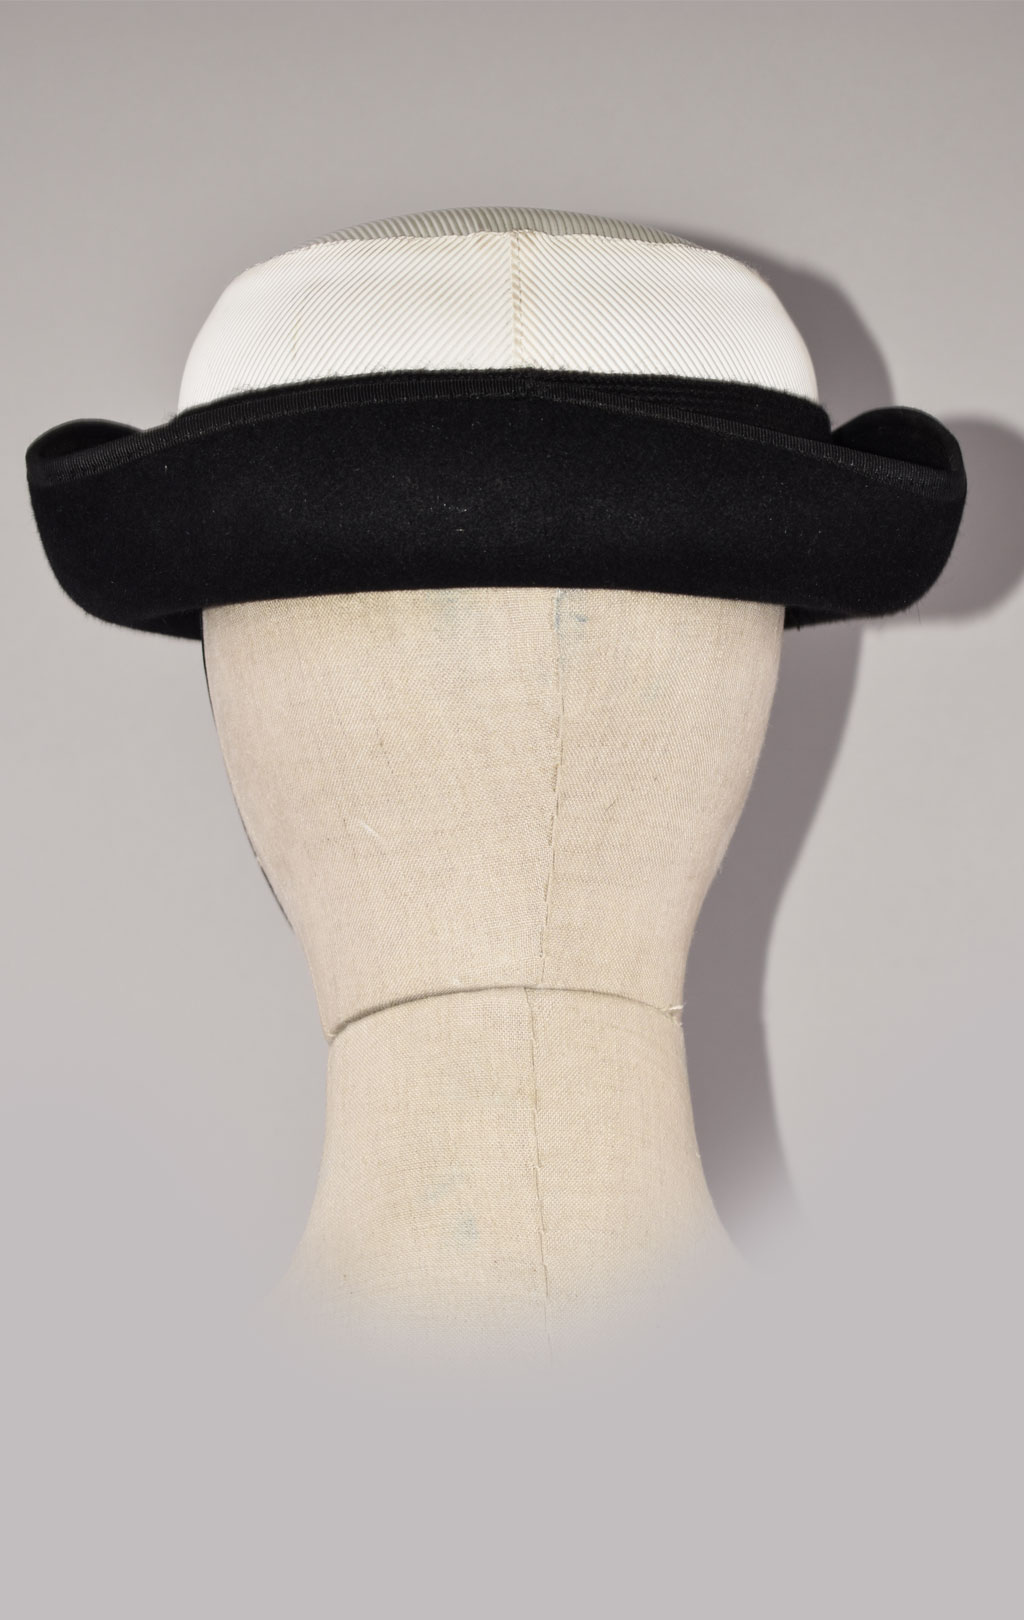 Женский форменный головной убор Royal Navy white б/у Англия